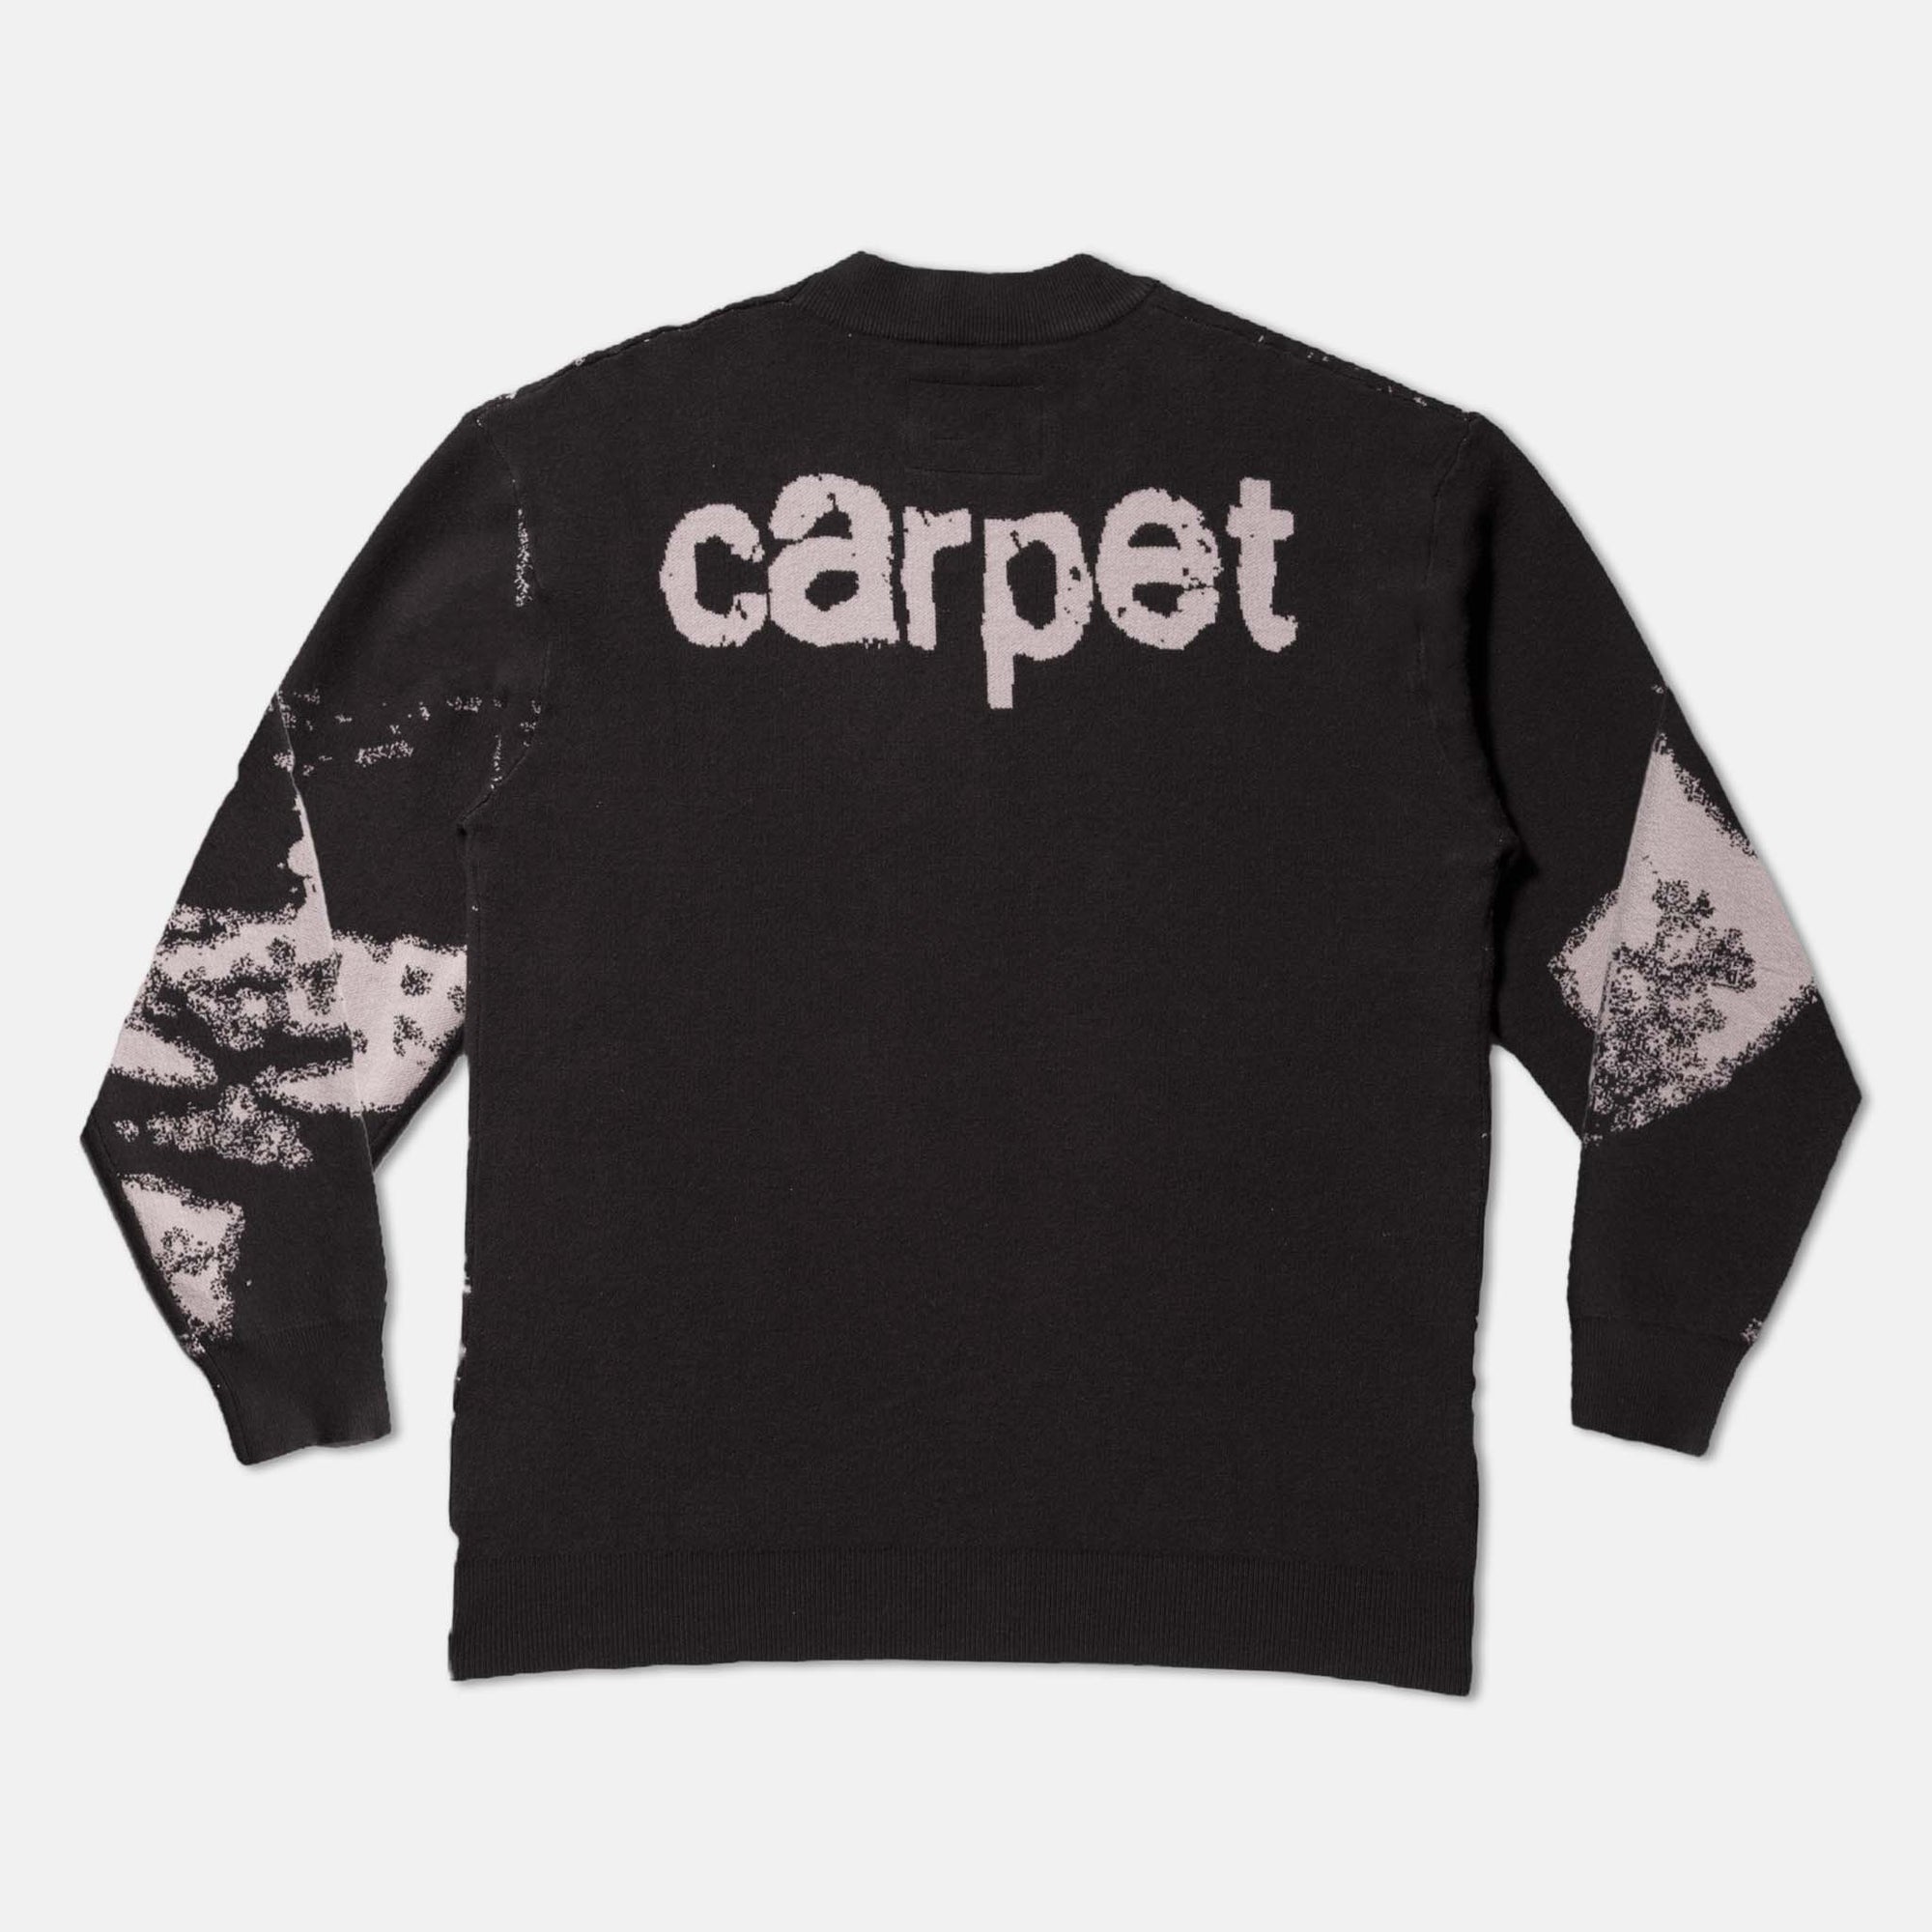 Carpet Company - Trouble Woven Knit Sweater - Black